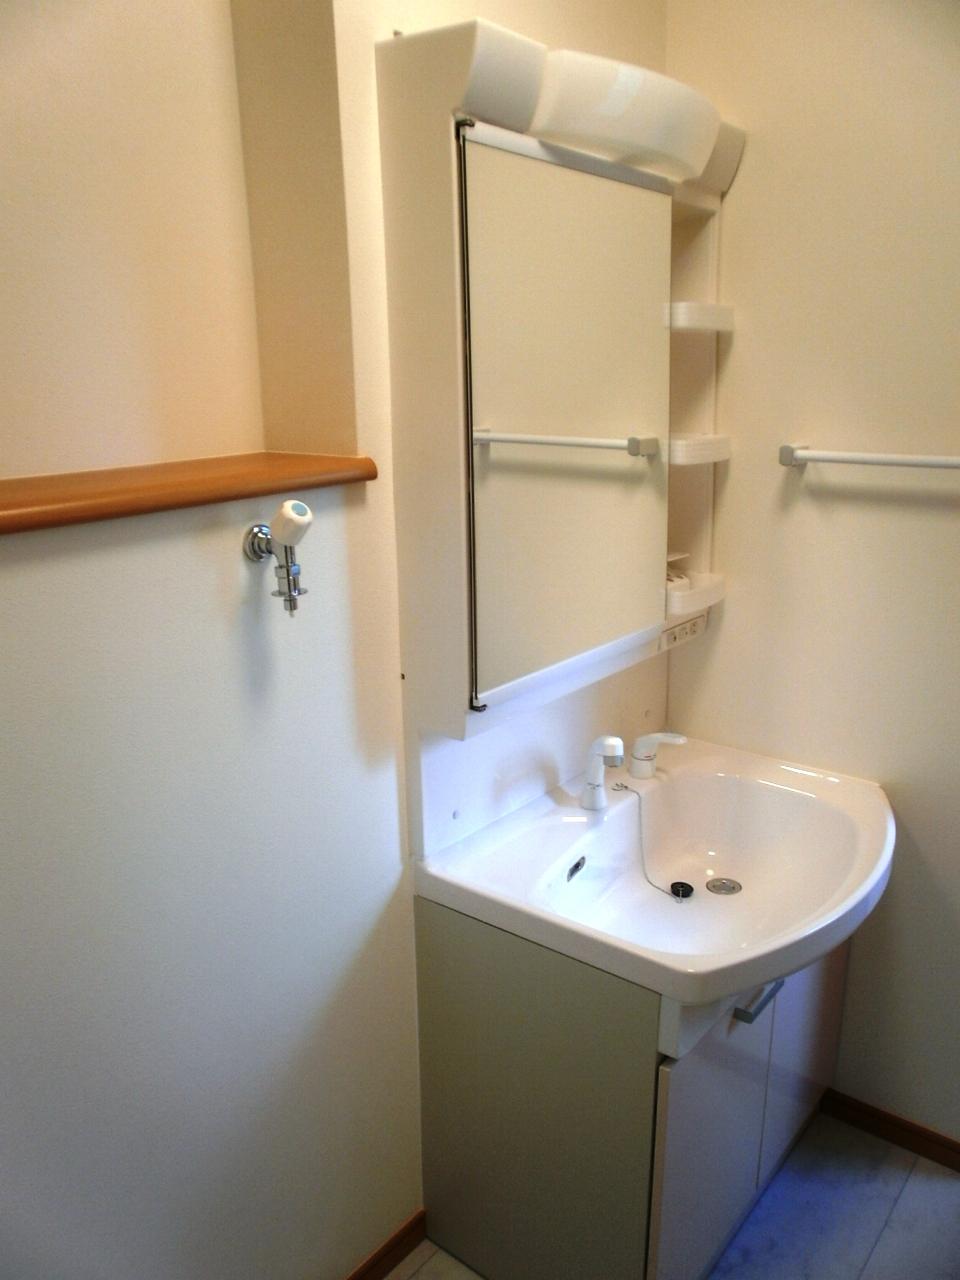 Wash basin, toilet. Indoor (April 13, 2013) Shooting